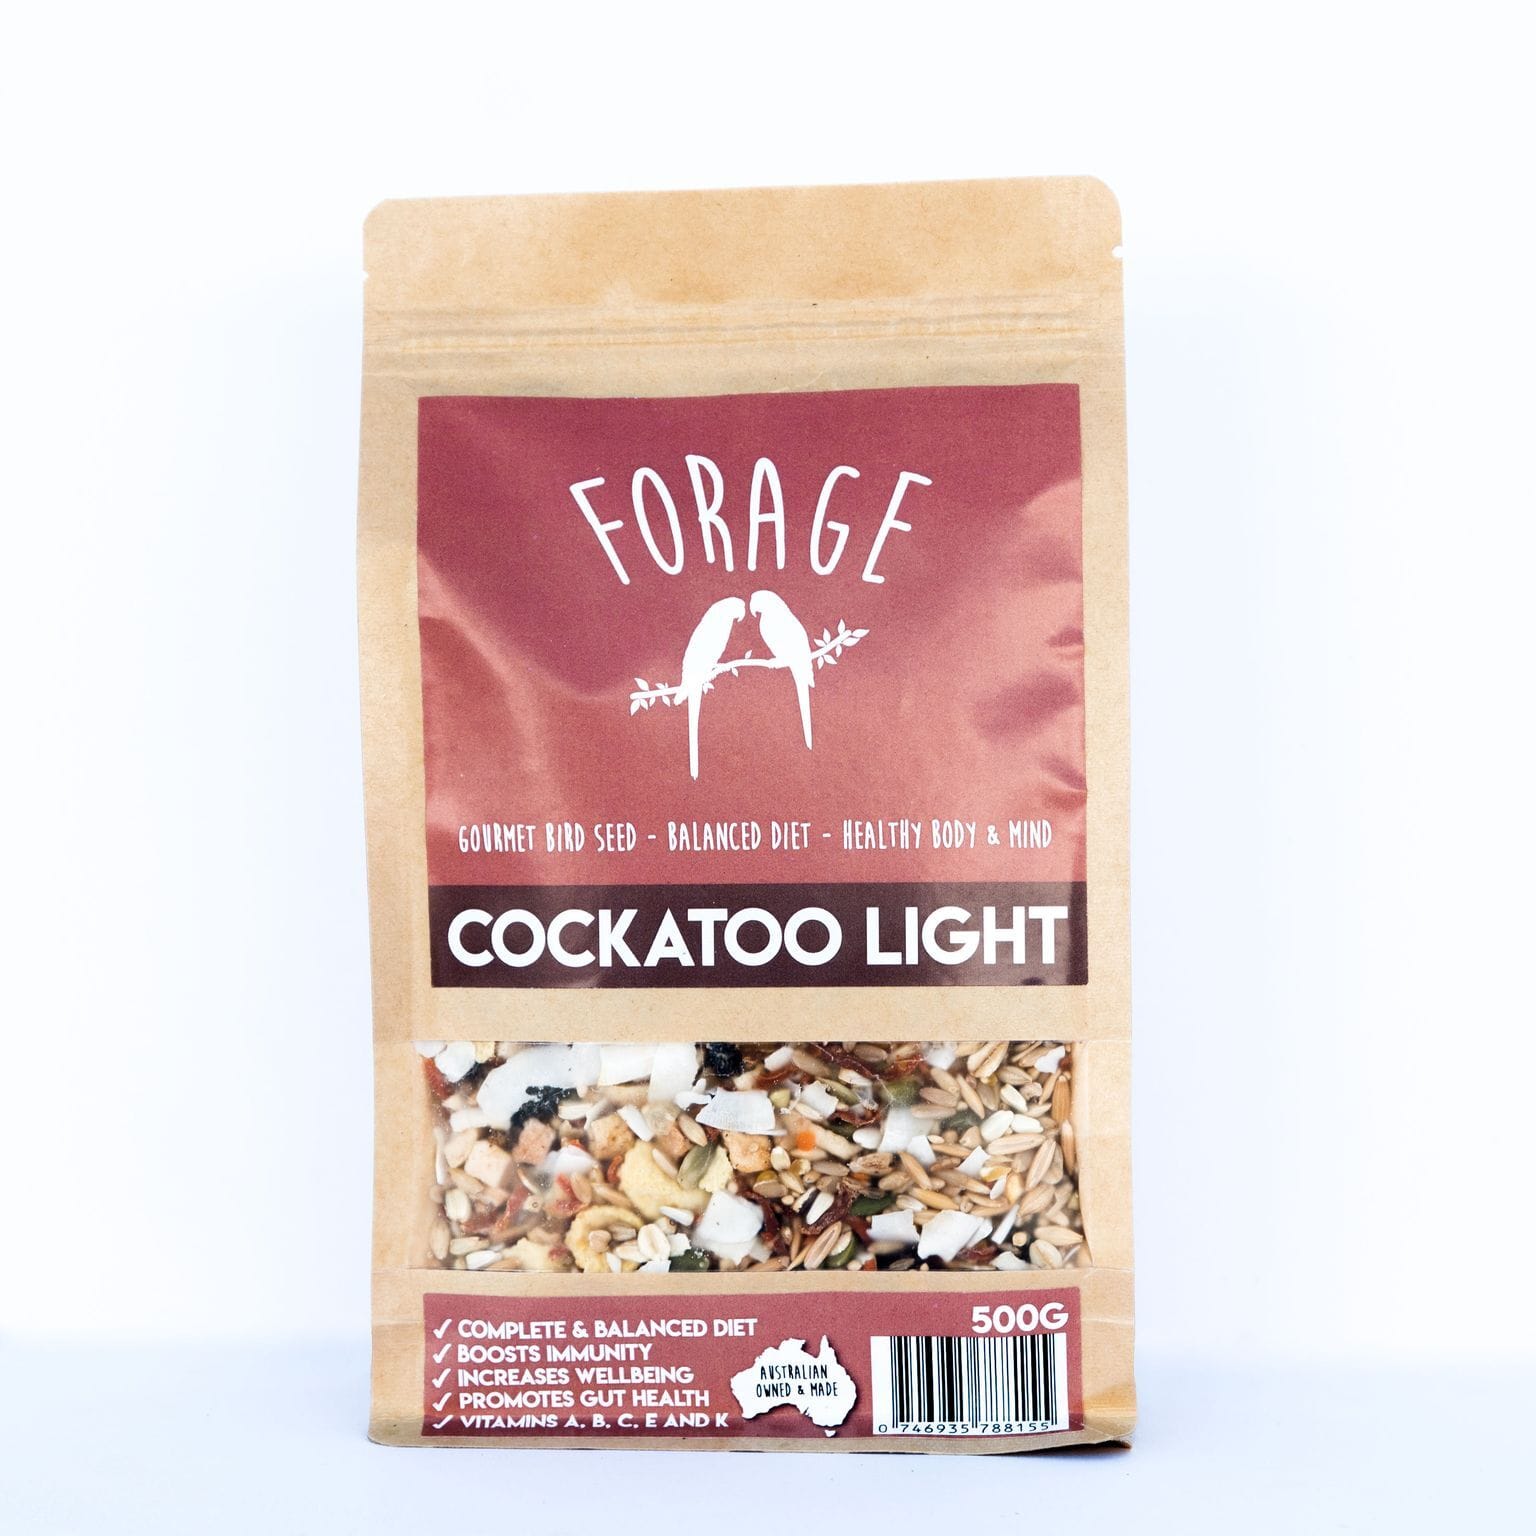 Forage Galah, Corella & Cockatoo Light Mix (Excl. TAS & WA) from Forage Gourmet Seed